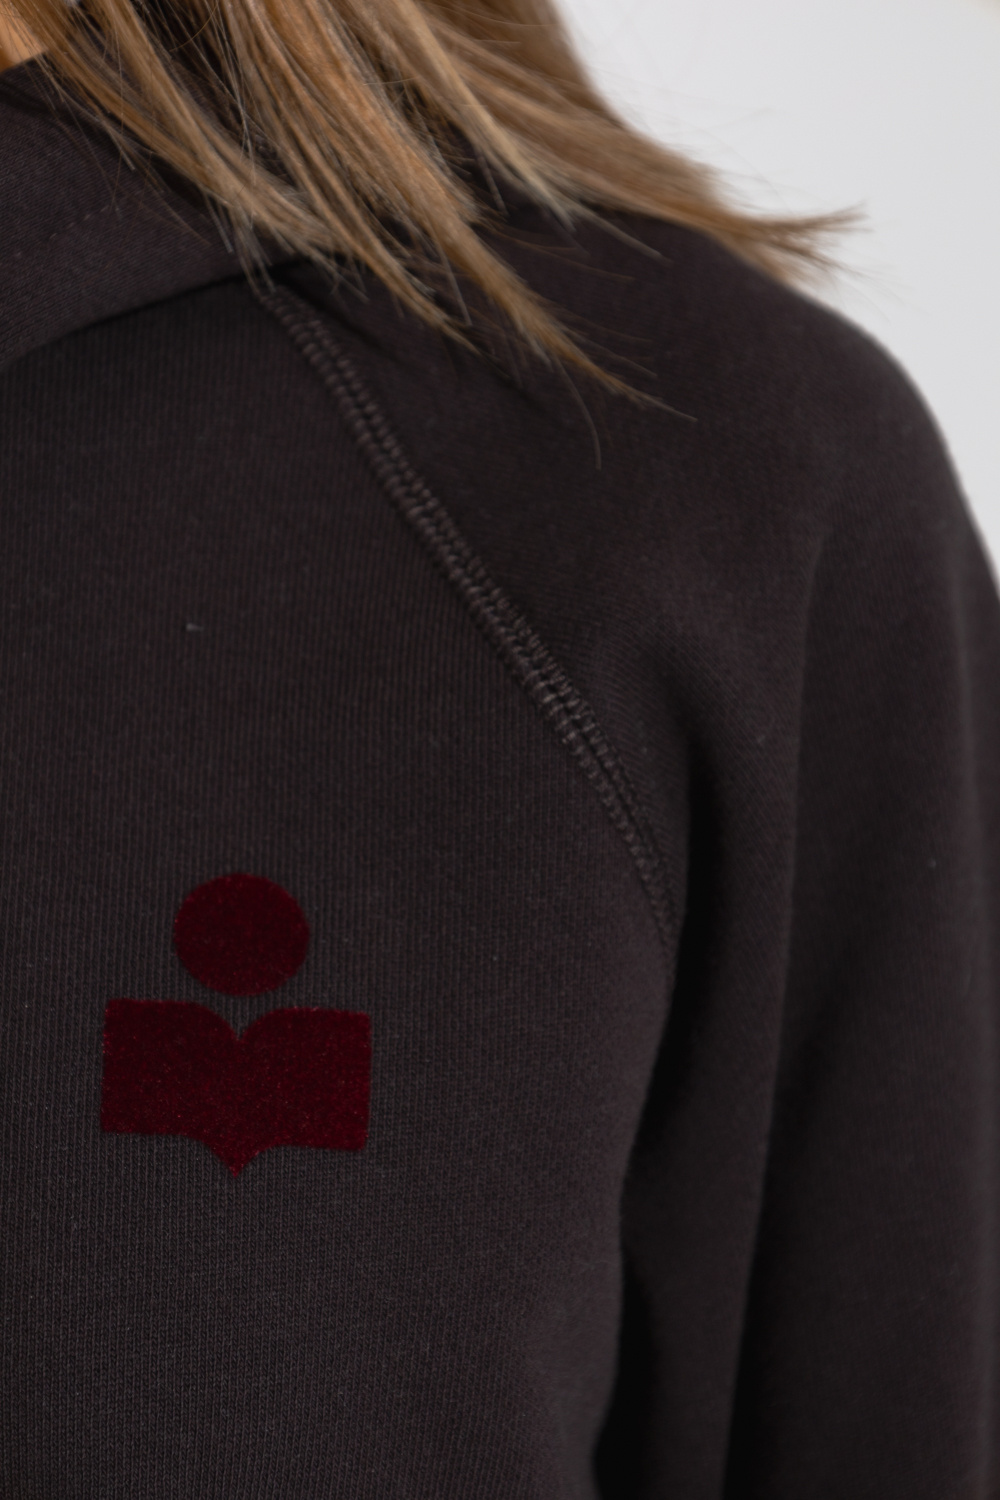 martine rose logo print long sleeve t shirt item ‘Malibu’ hoodie